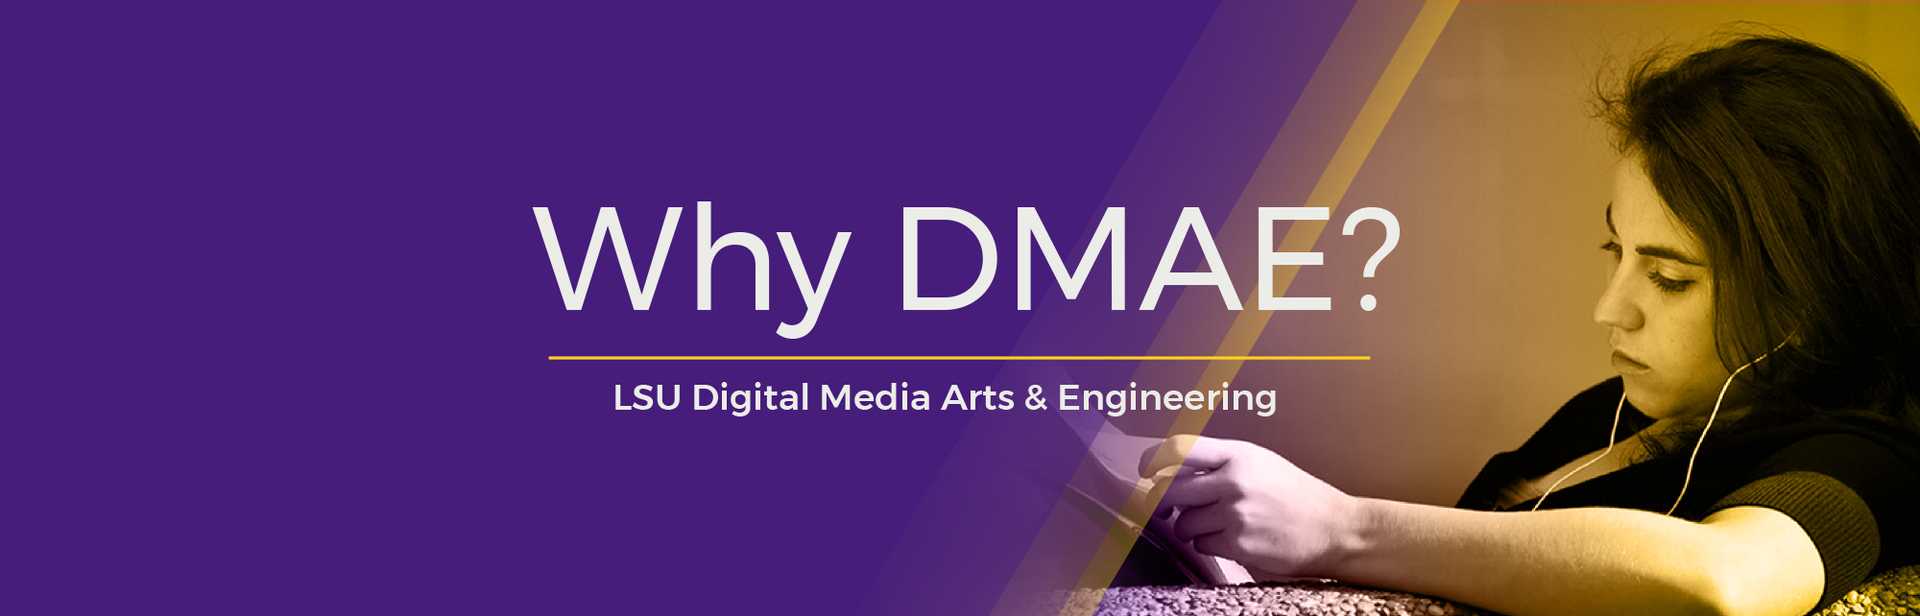 Academics - Why DMAE? Digital Media Arts & Engineering photo title